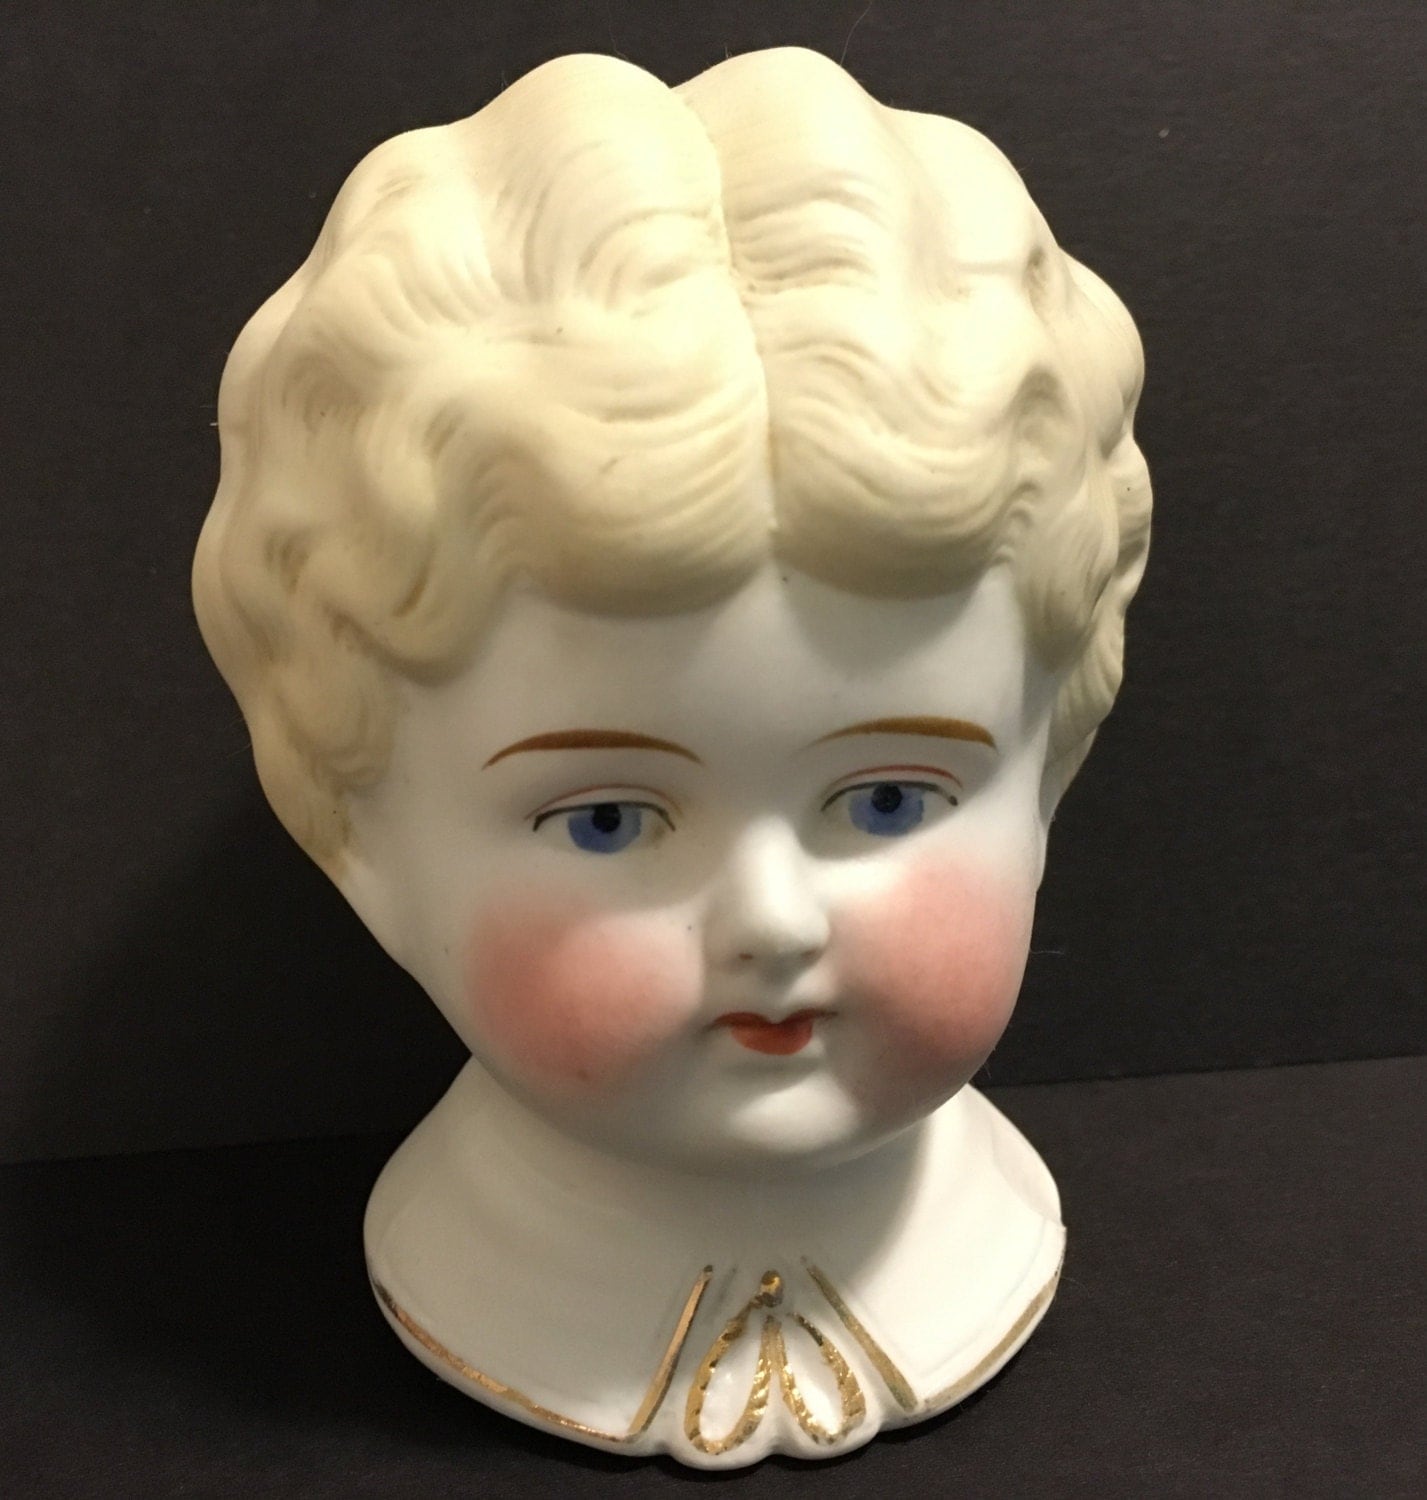 Vintage Bisque Doll Head Porcelain Painted Blue Eyes by KimKatShop